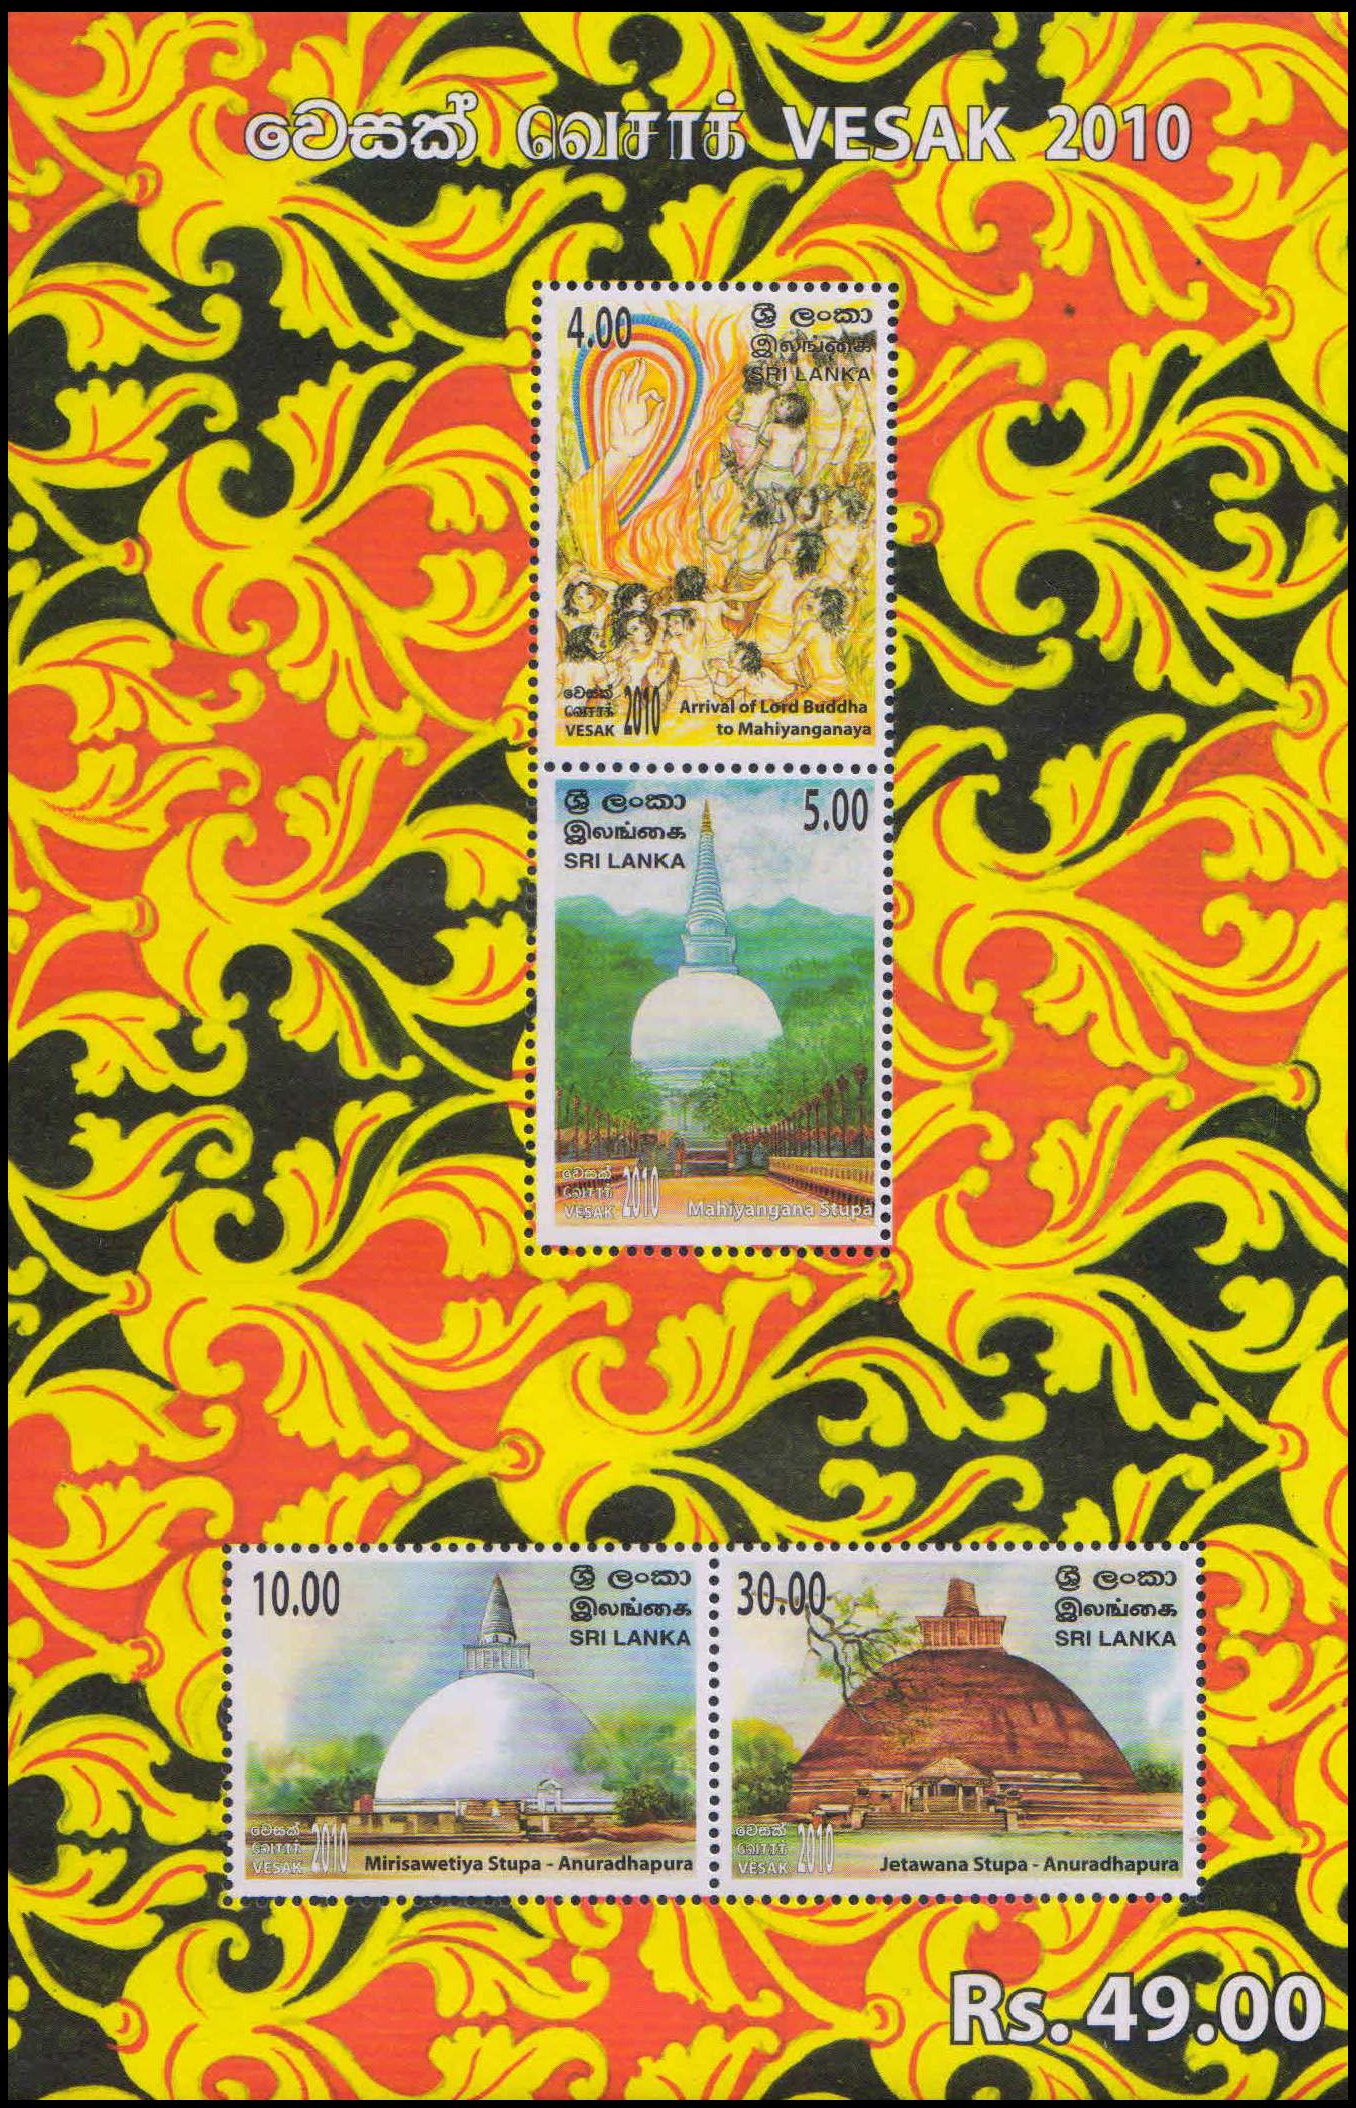 SRI LANKA 2010-Vesak, Buddha Day, Stupa Anuradhapura, Sheet of 4, MNH, S.G. MS 2031